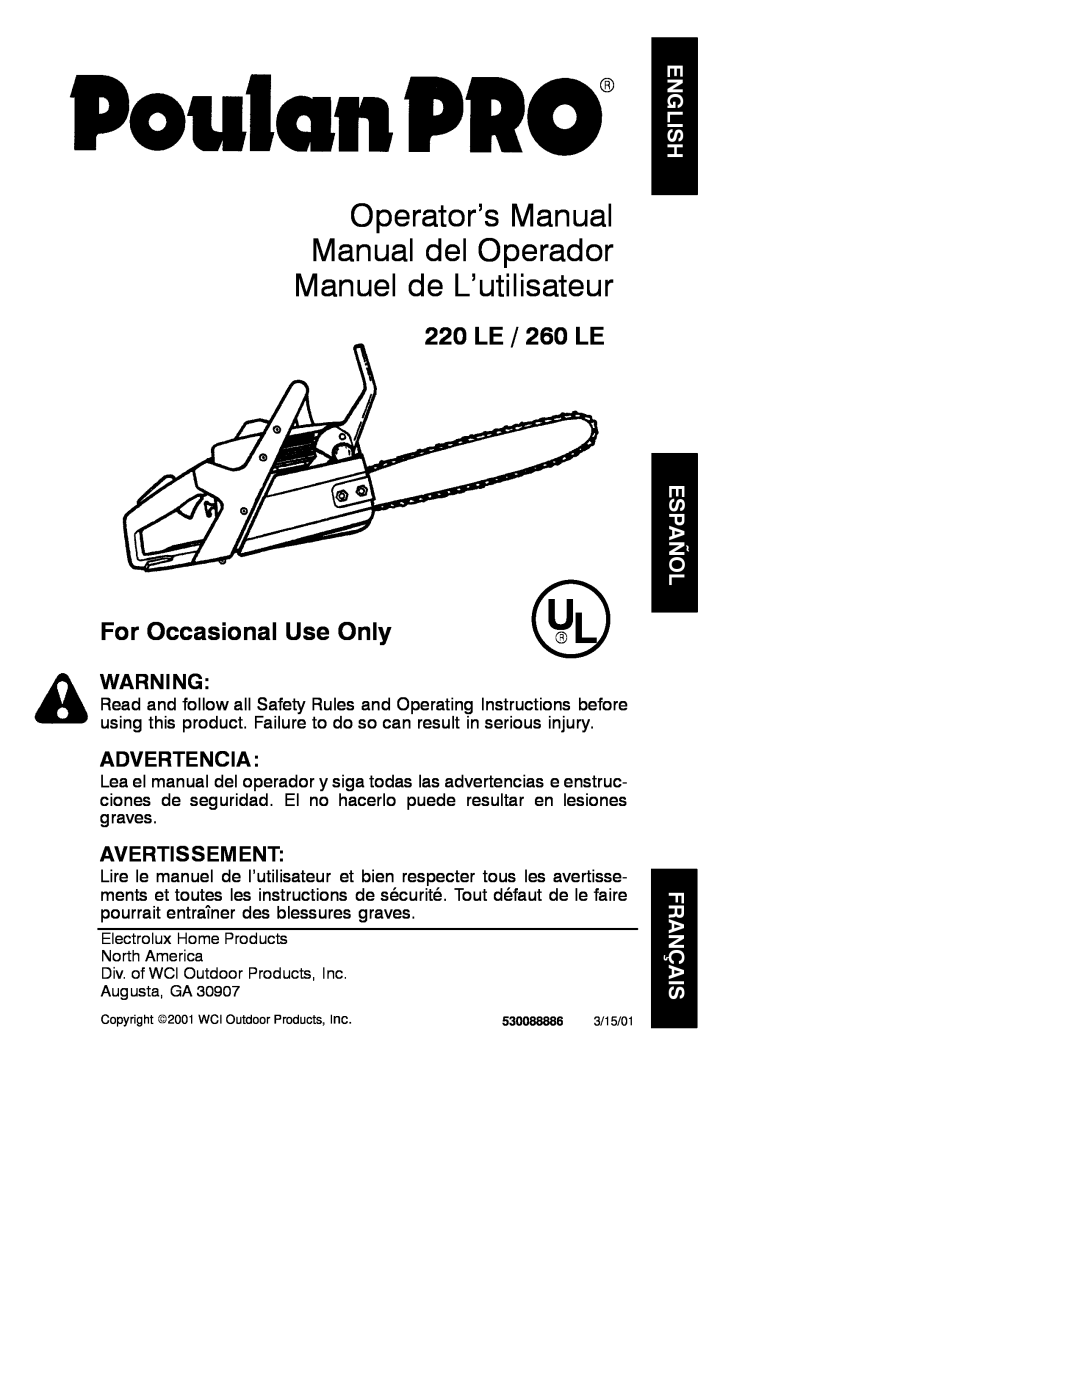 Poulan 530088886 manual Operator’s Manual Manual del Operador Manuel de L’utilisateur, 220 LE / 260 LE, Advertencia 